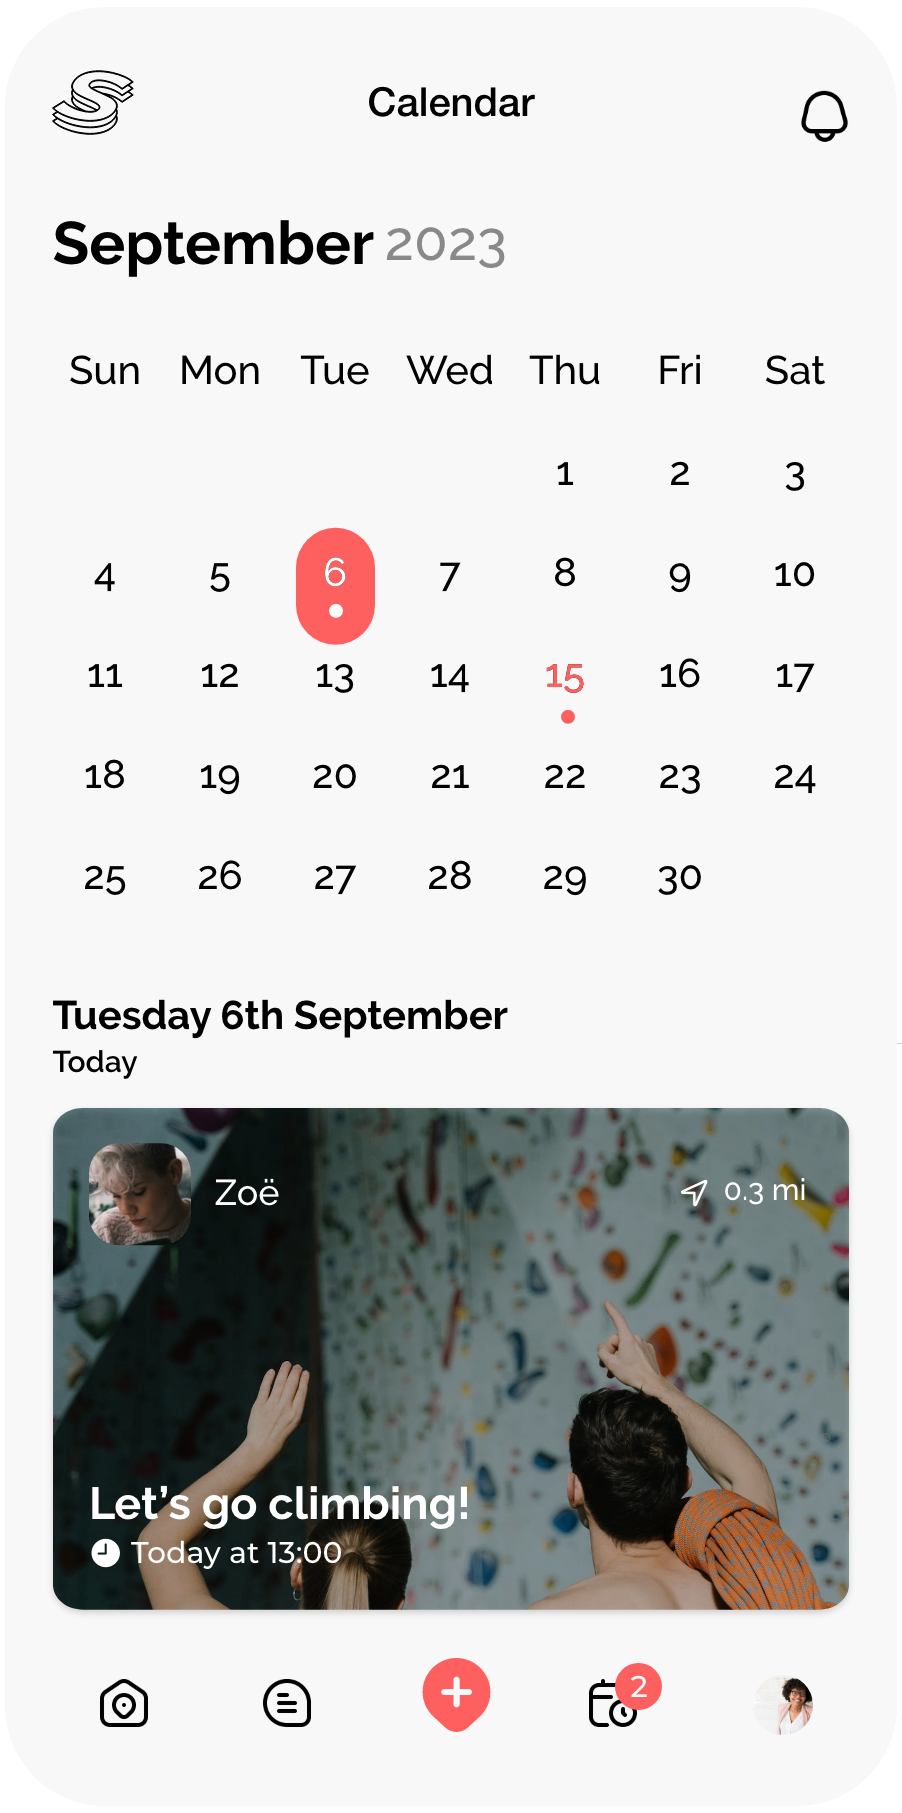 Socially app - Calendar